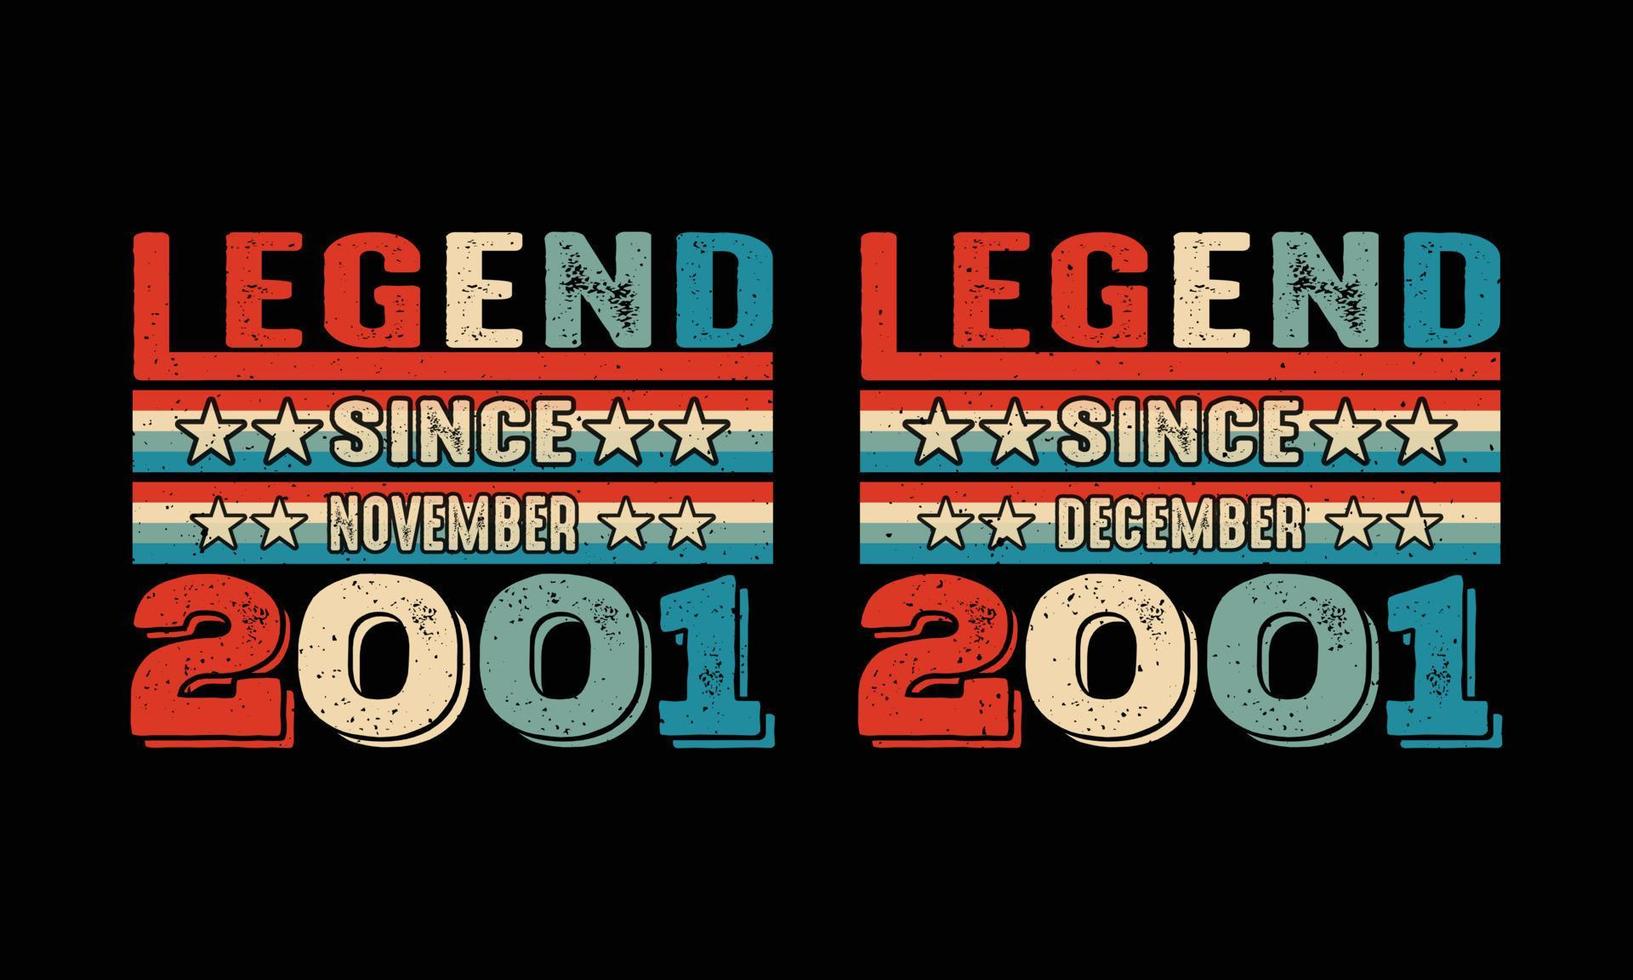 Legend since September and October-2001- Birthday Vintage T shirt Design. vector